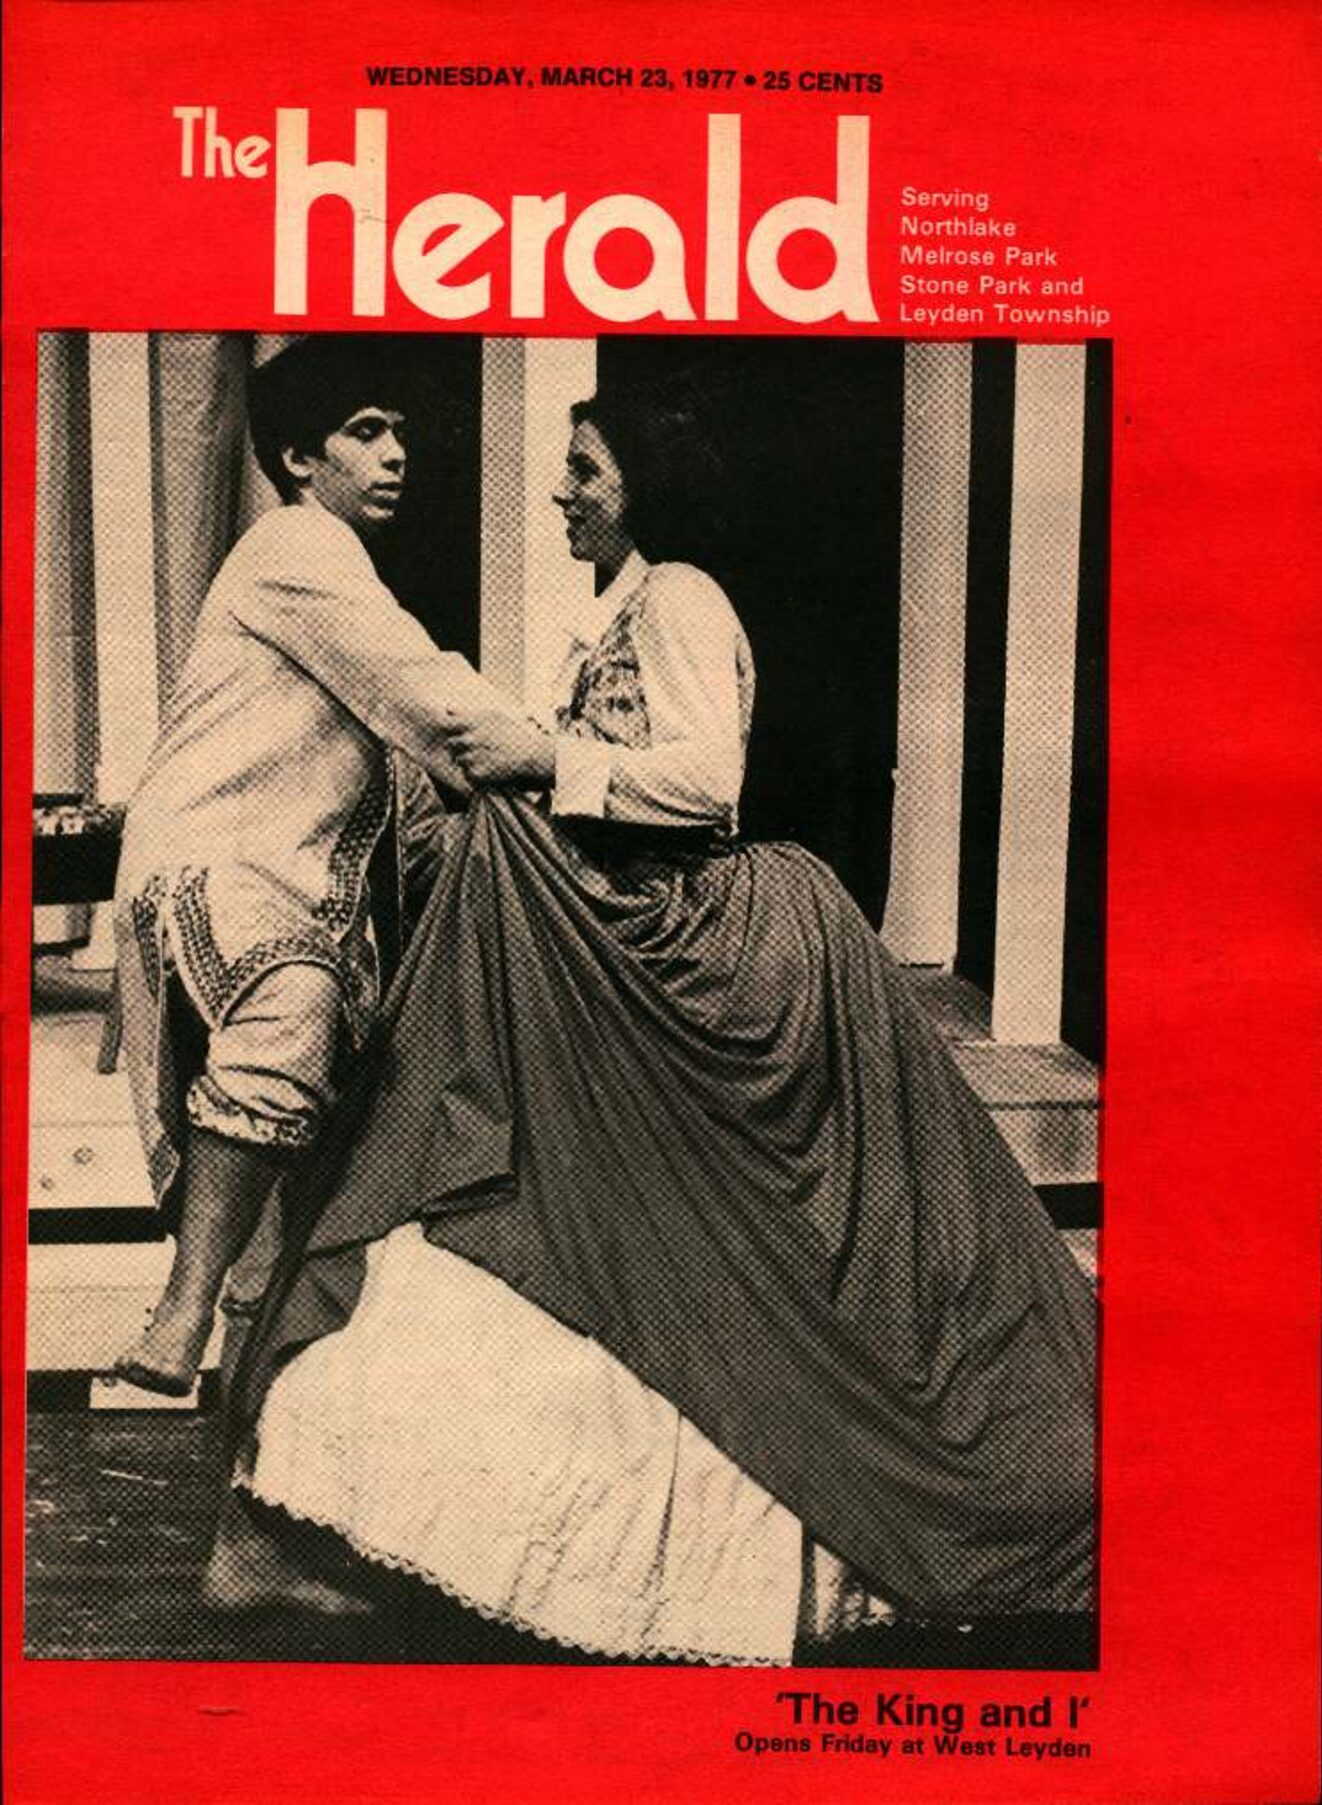 The Herald – 19770323